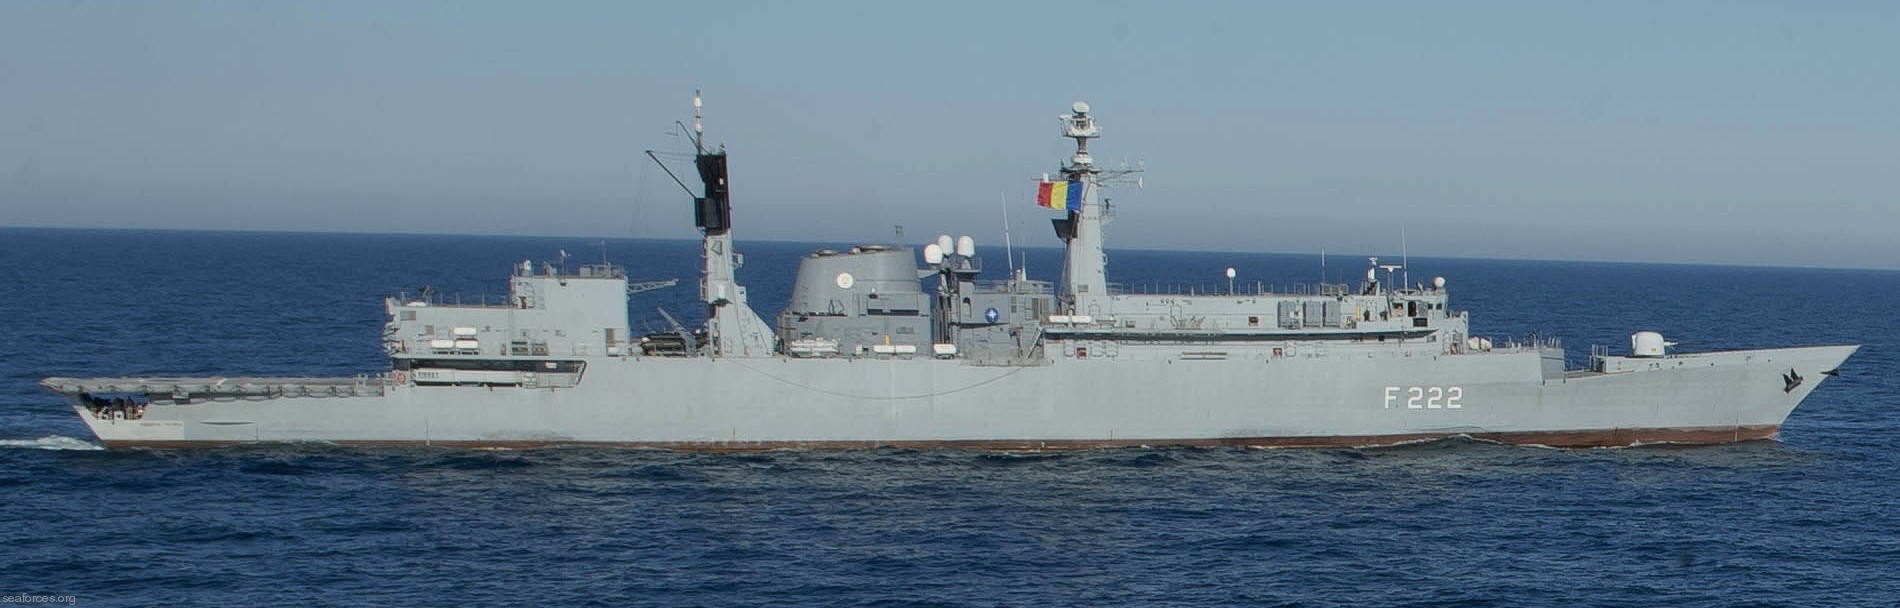 f-222 ros regina maria frigate type 22 broadsword class romanian navy 05